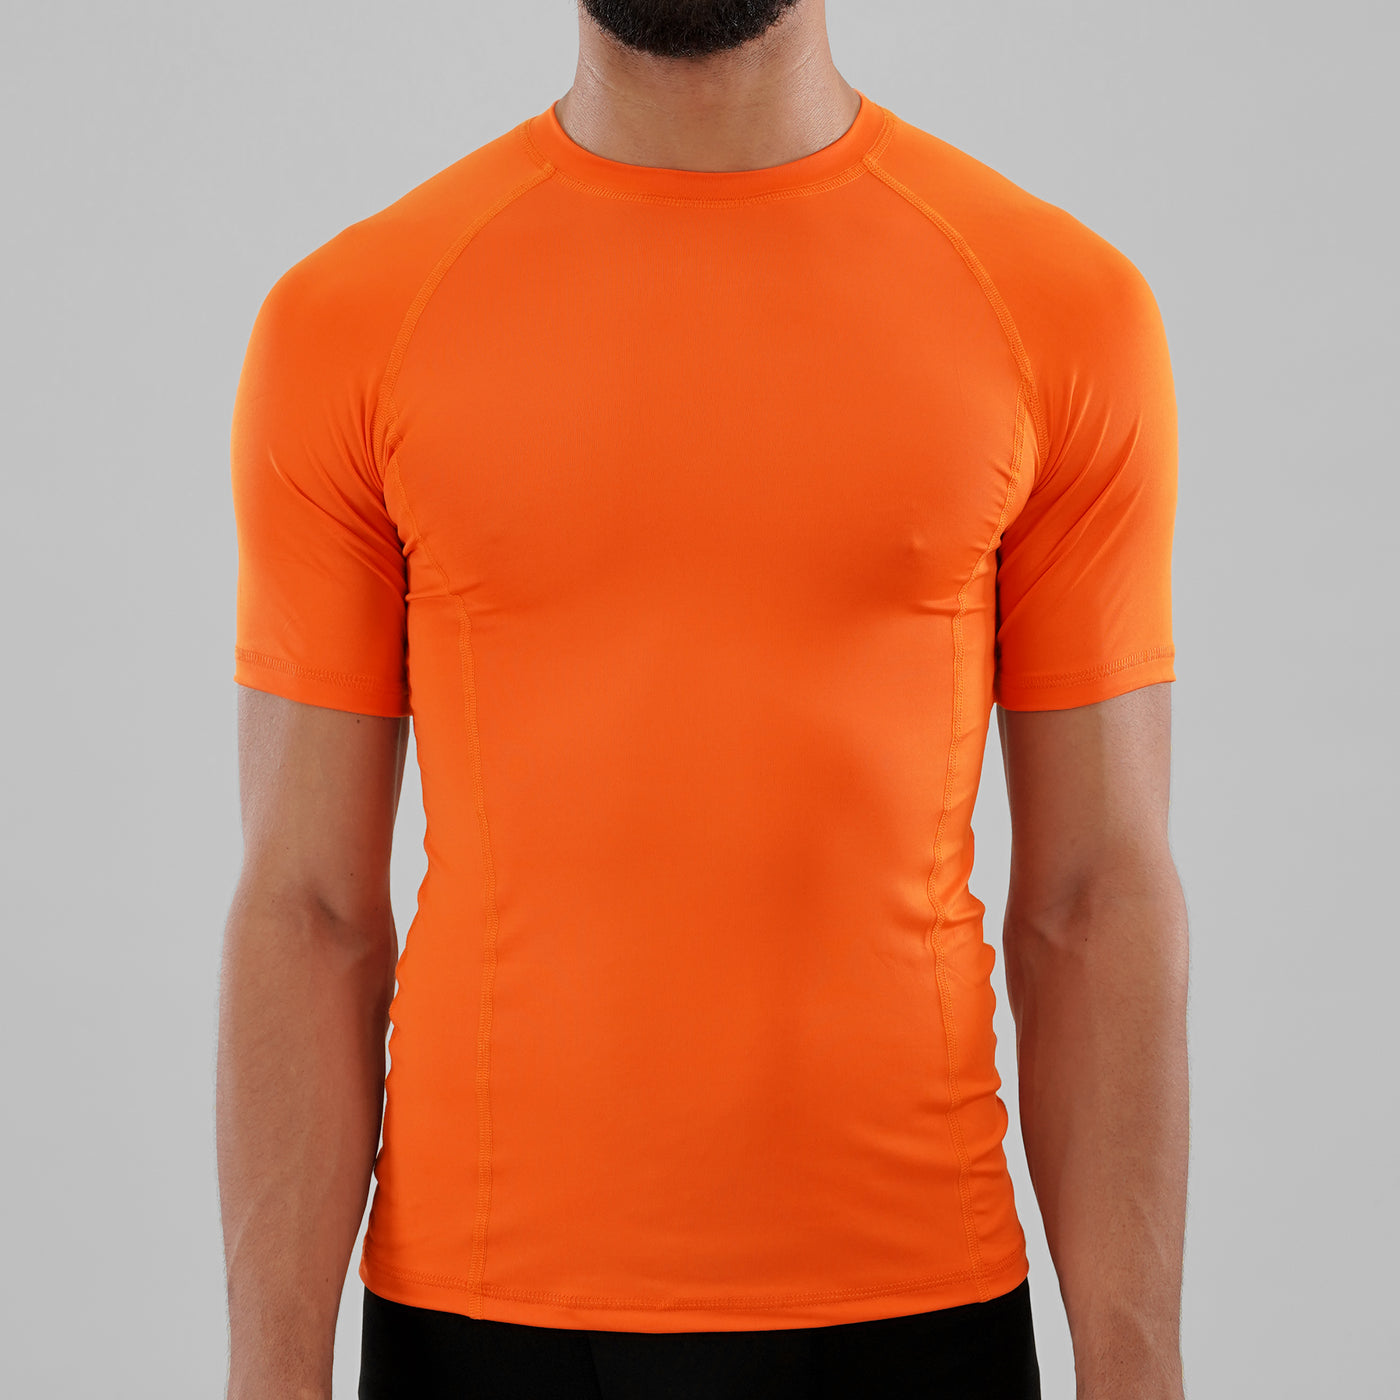 Hot Orange Compression Shirt